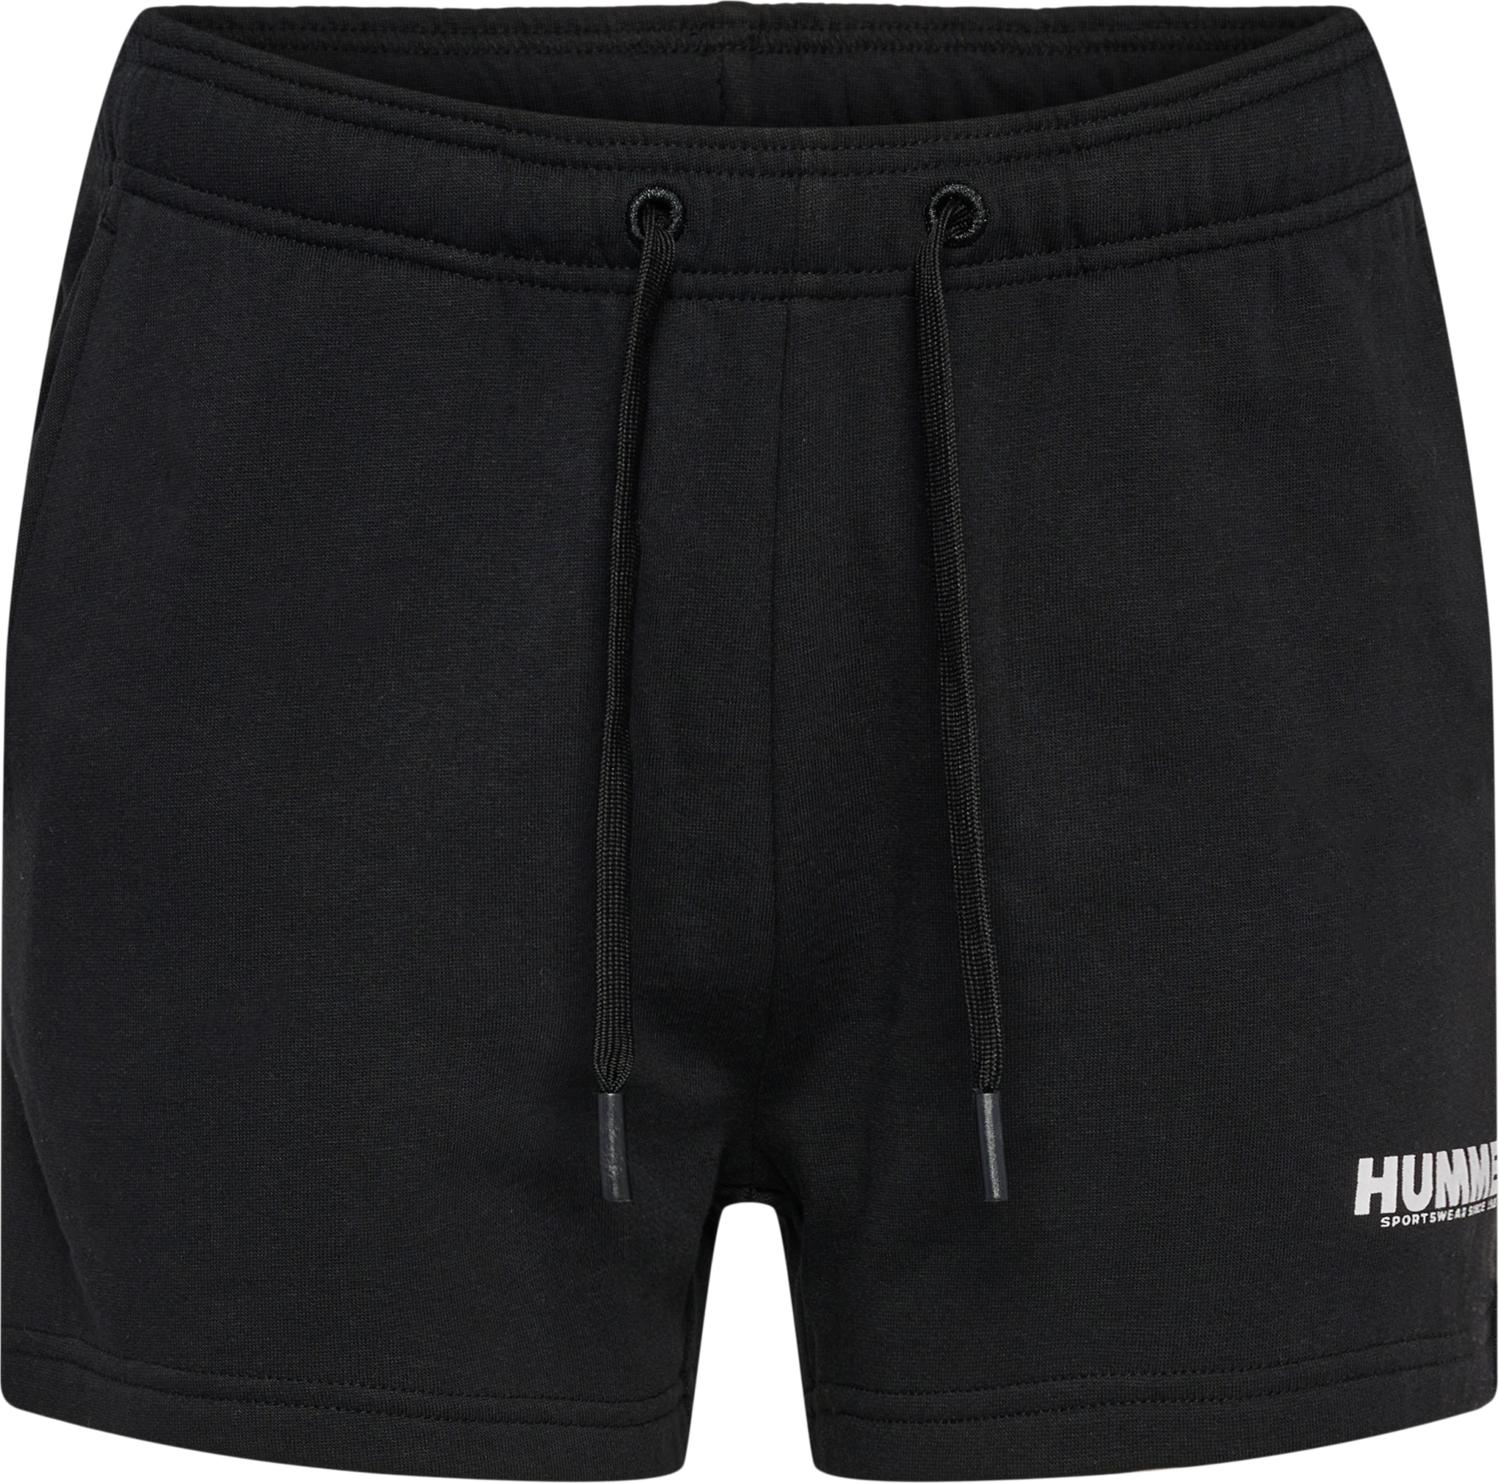 Hummel Hummel Women's hmlLEGACY Shorts Black M, Black